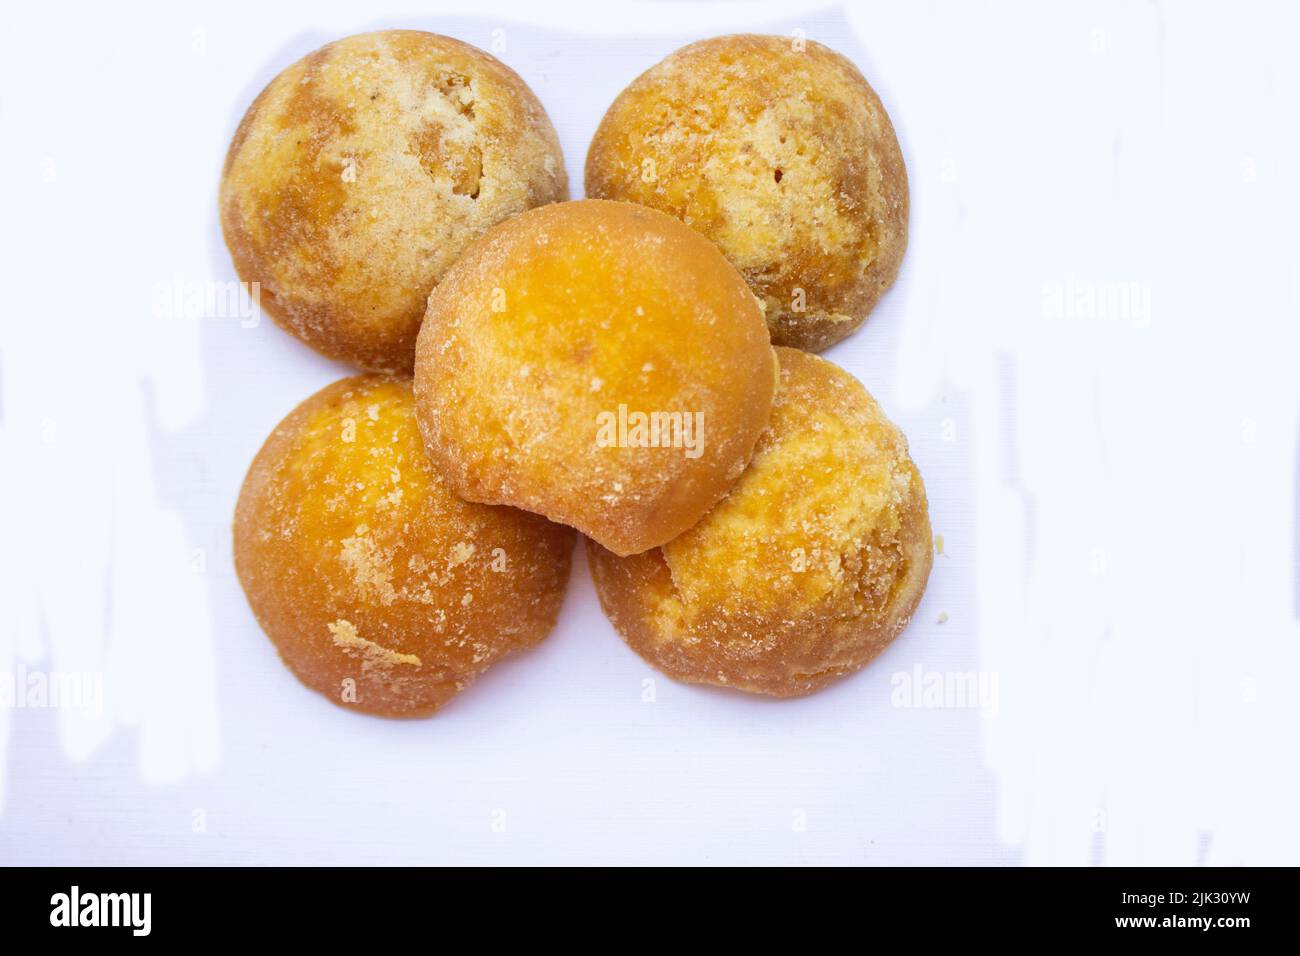 brown sugar or java sugar or palm sugar or gula jawa isolated on white background. Top view. Flat lay. sweet Stock Photo